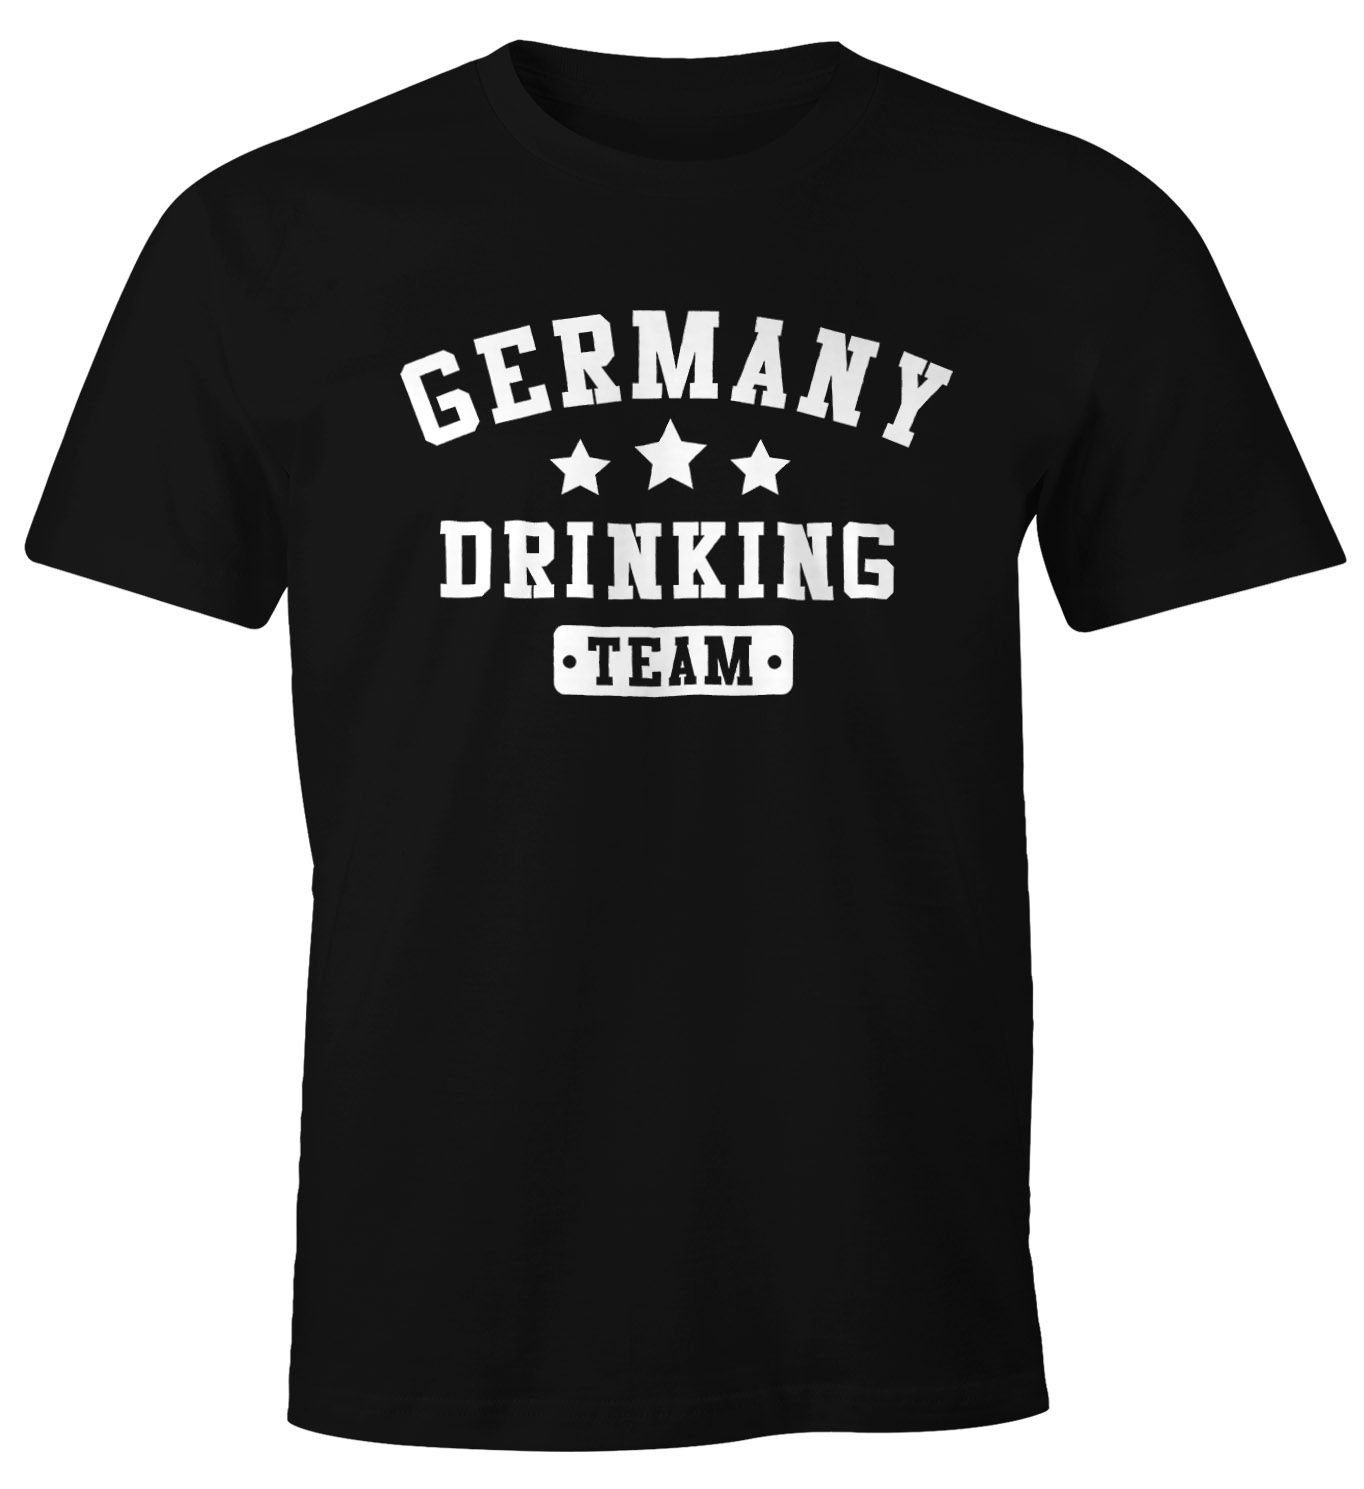 MoonWorks Print-Shirt Herren T-Shirt Germany Drinking Team Bier Fun-Shirt Moonworks® mit Print schwarz